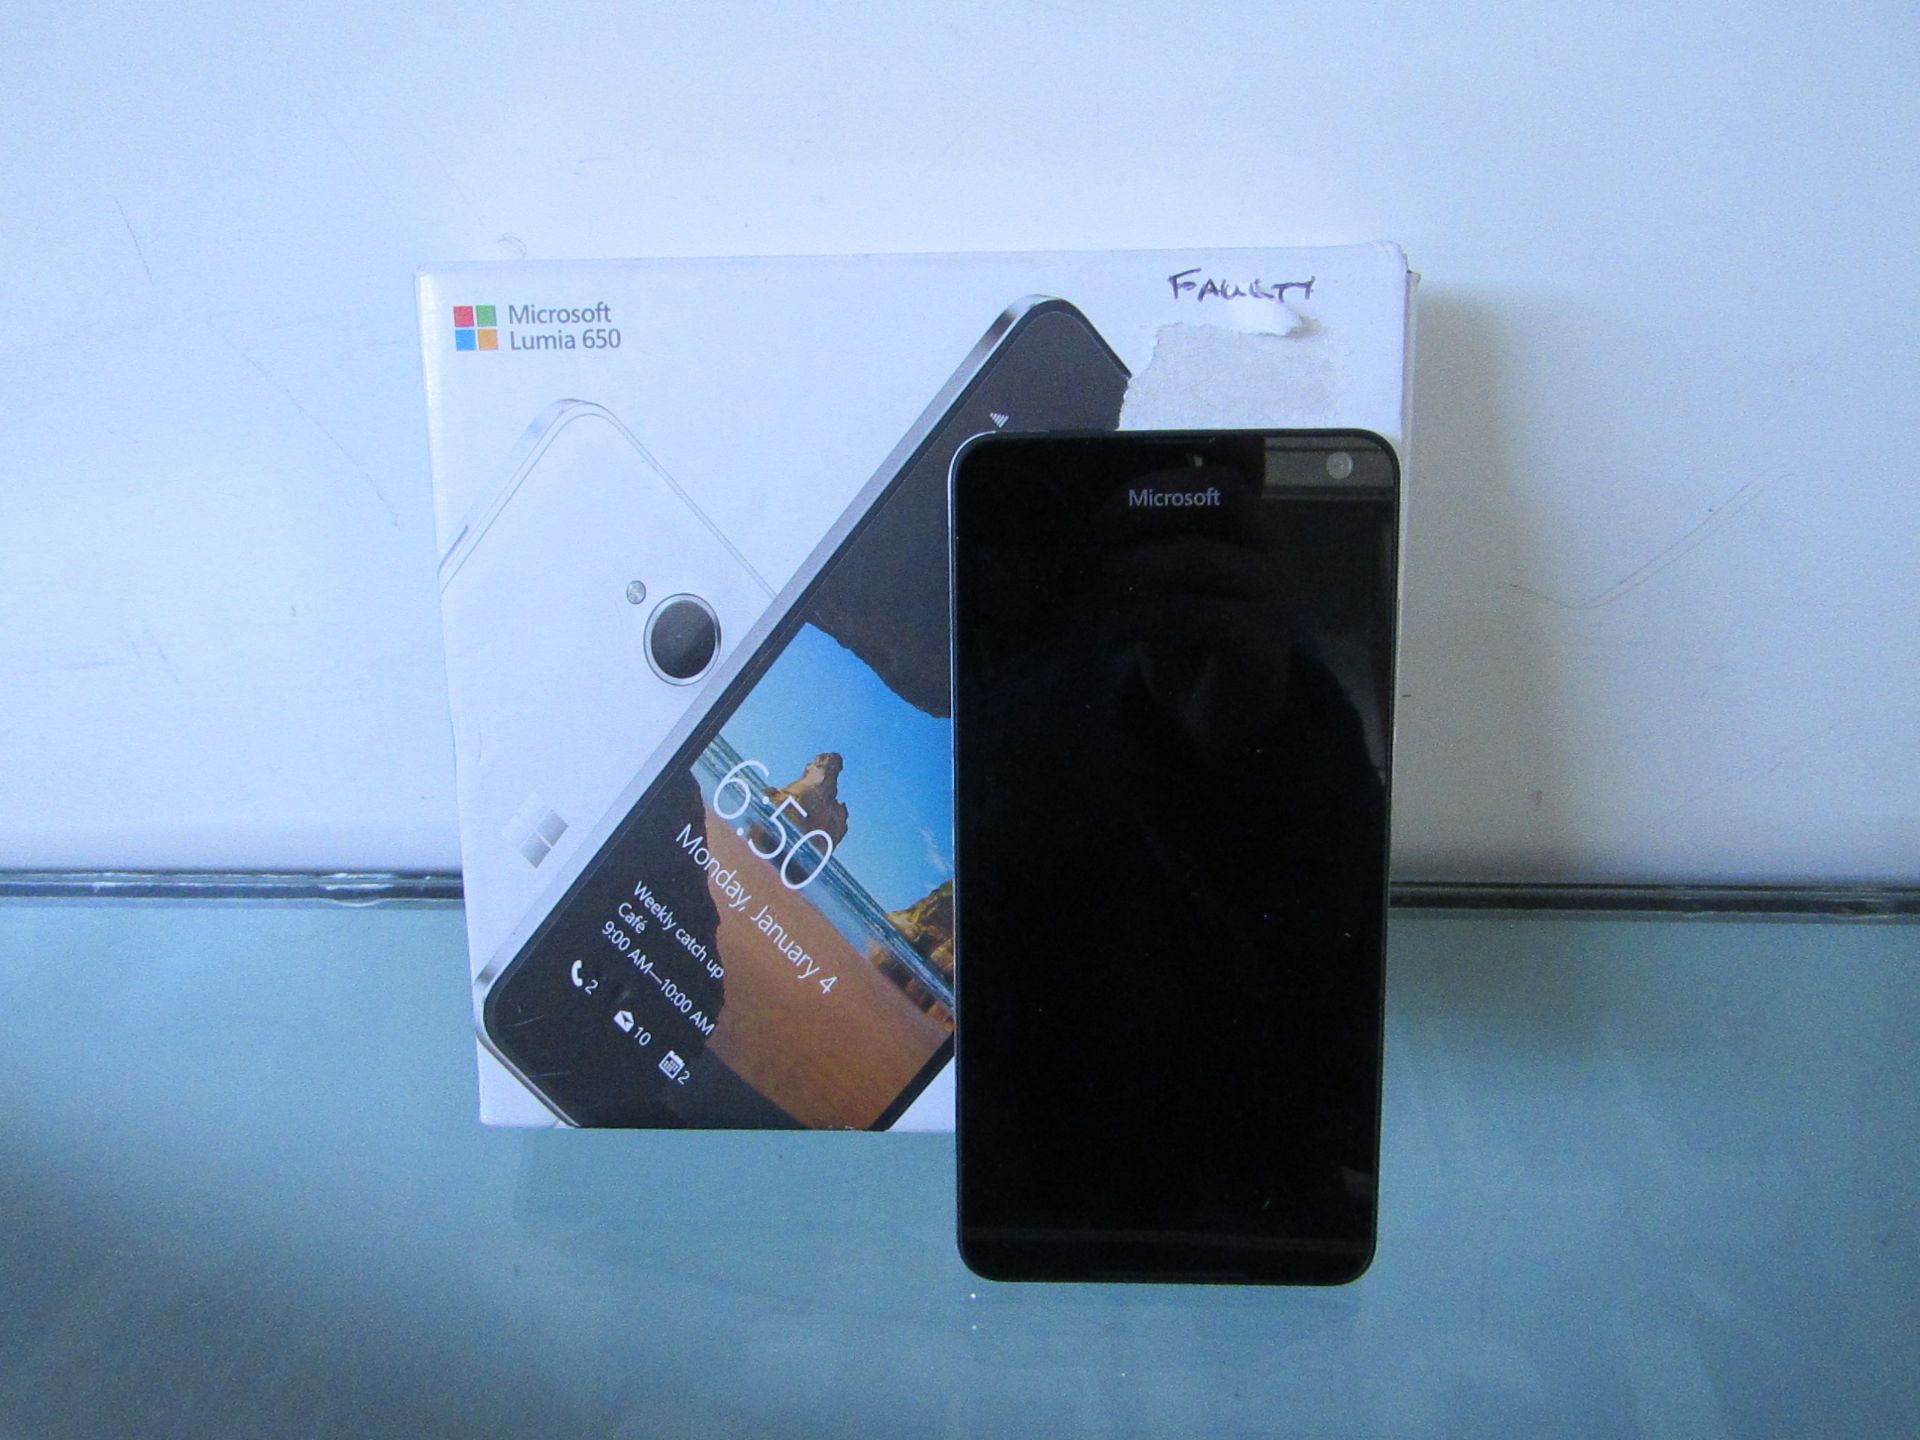 Microsoft Lumia 650 sim Free smart phone with original box, phone vibrates as if its turning on